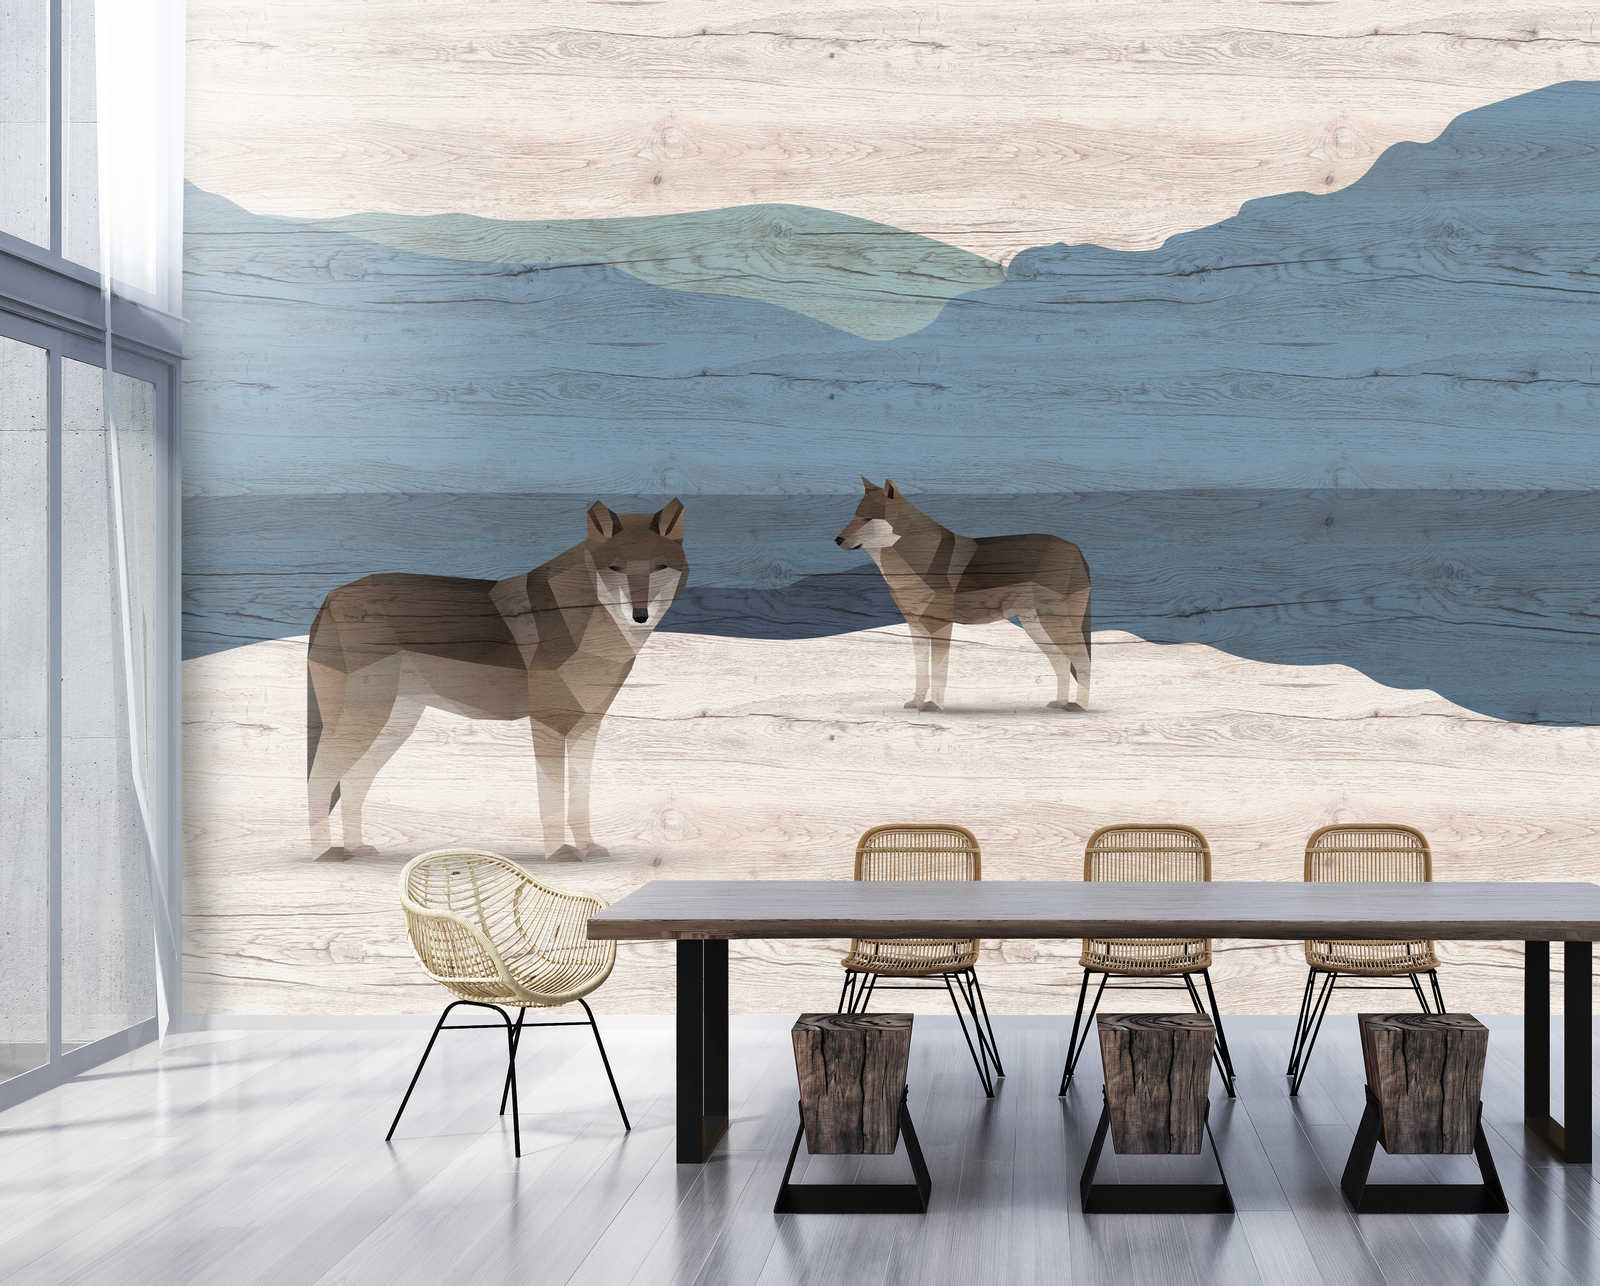             Yukon 1 - Mountains & Dogs muurschildering met houtstructuur
        